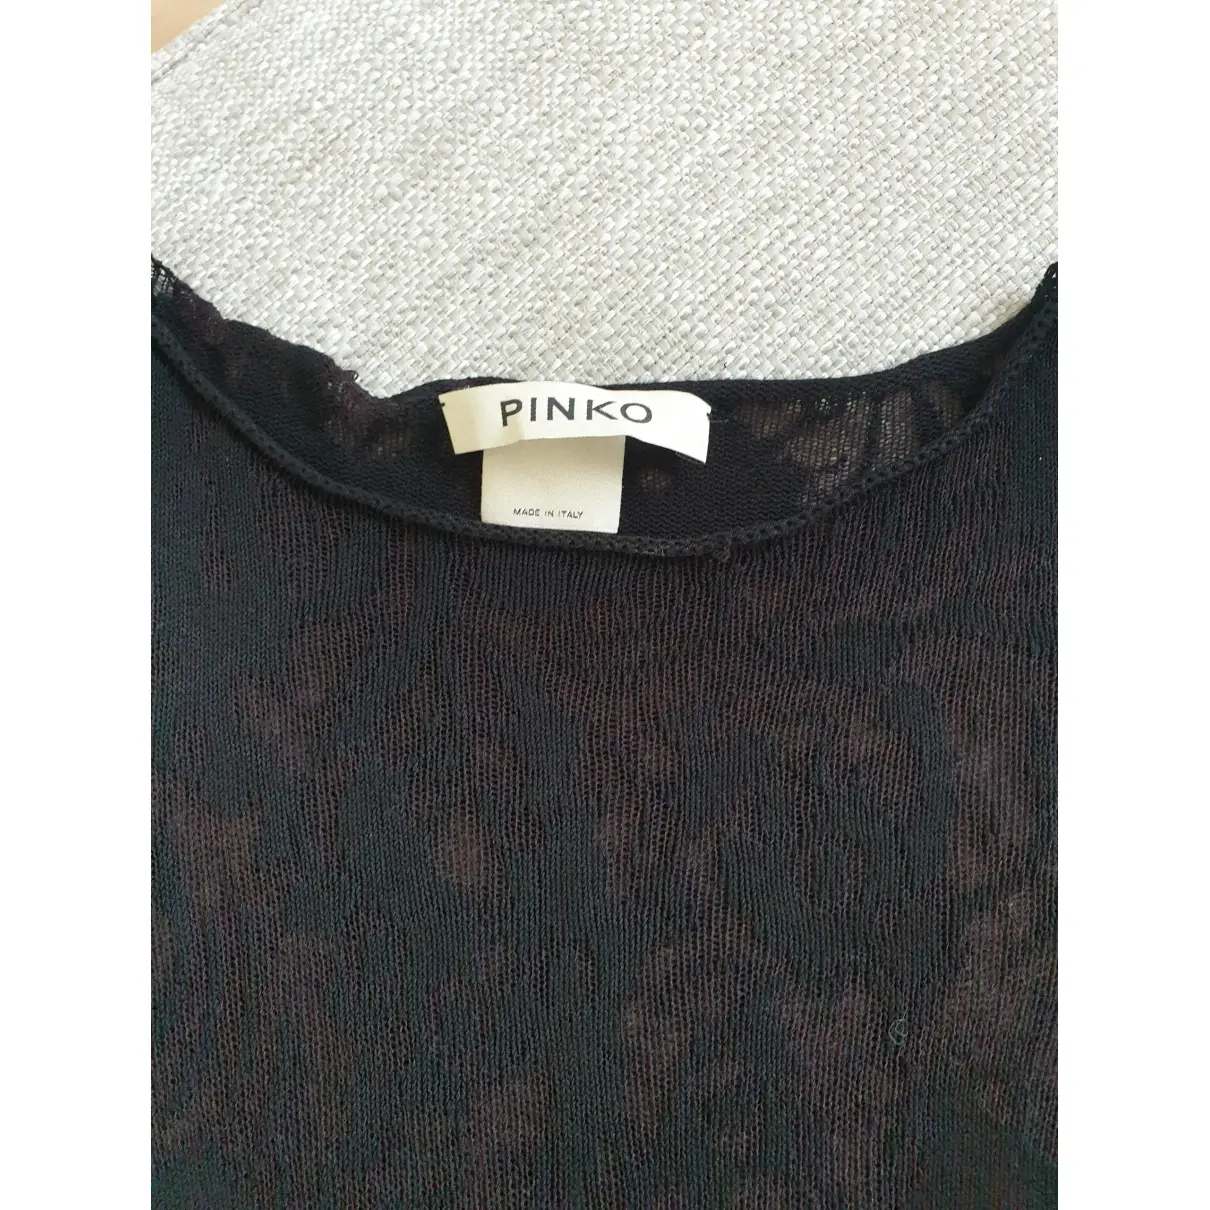 Buy Pinko Wool mini dress online